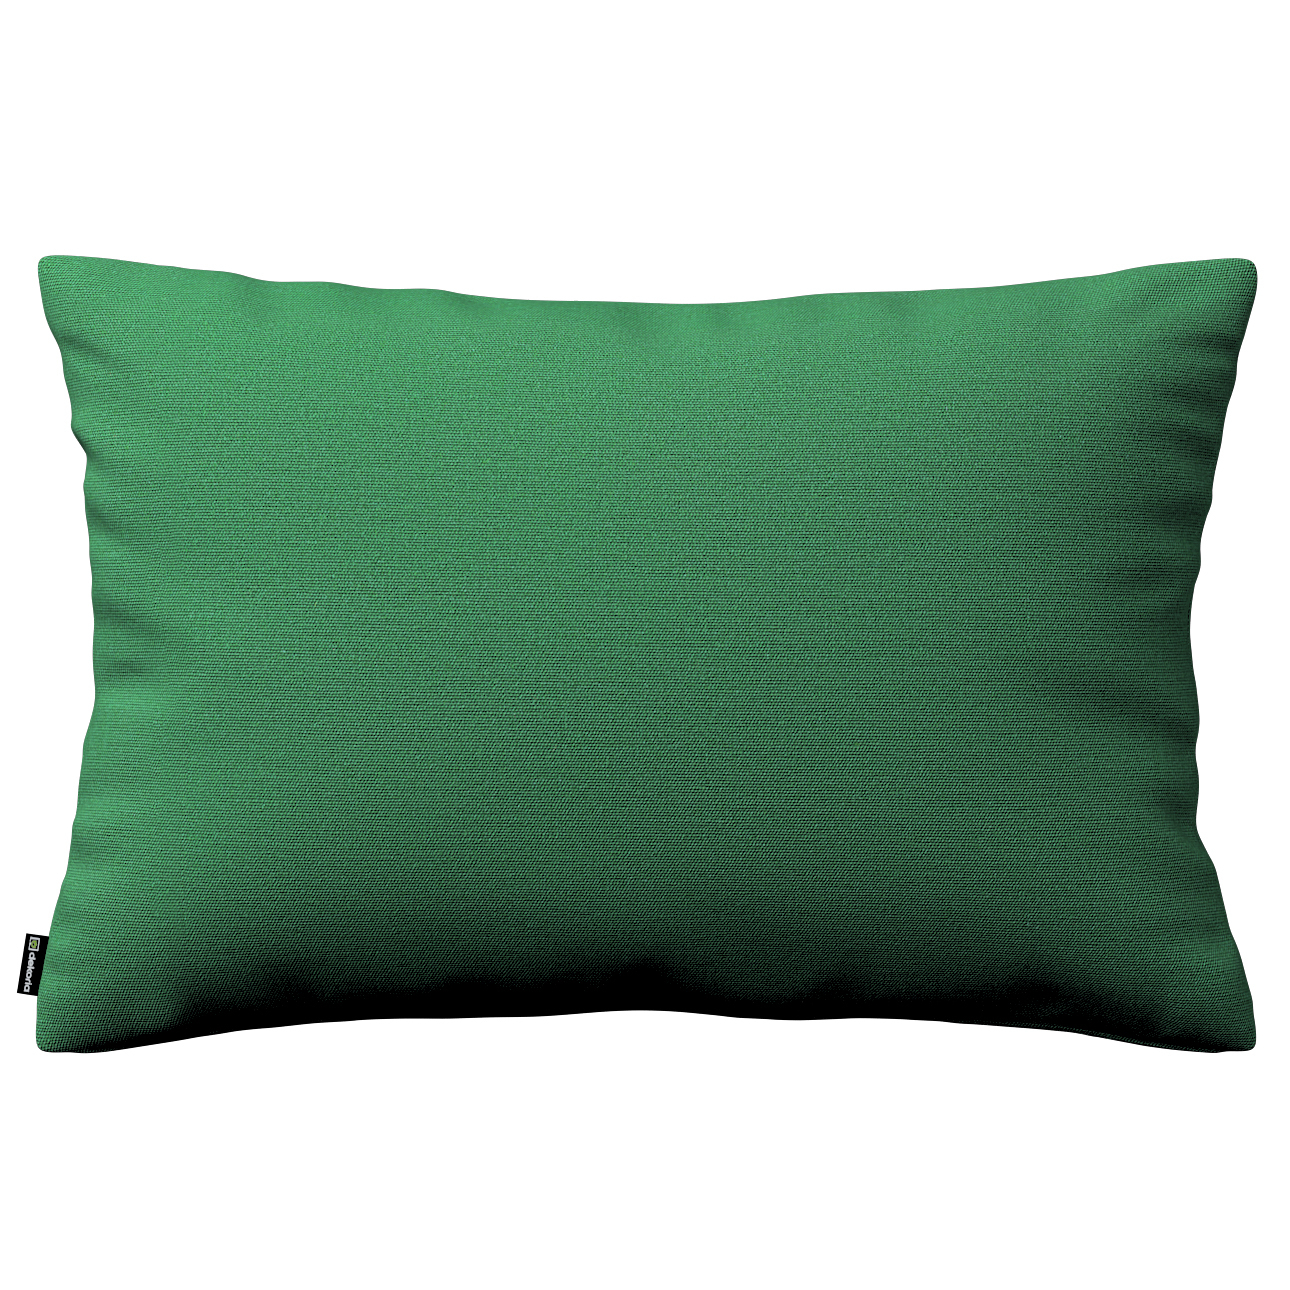 Kissenhülle Kinga rechteckig, grün, 60 x 40 cm, Loneta (133-18) günstig online kaufen